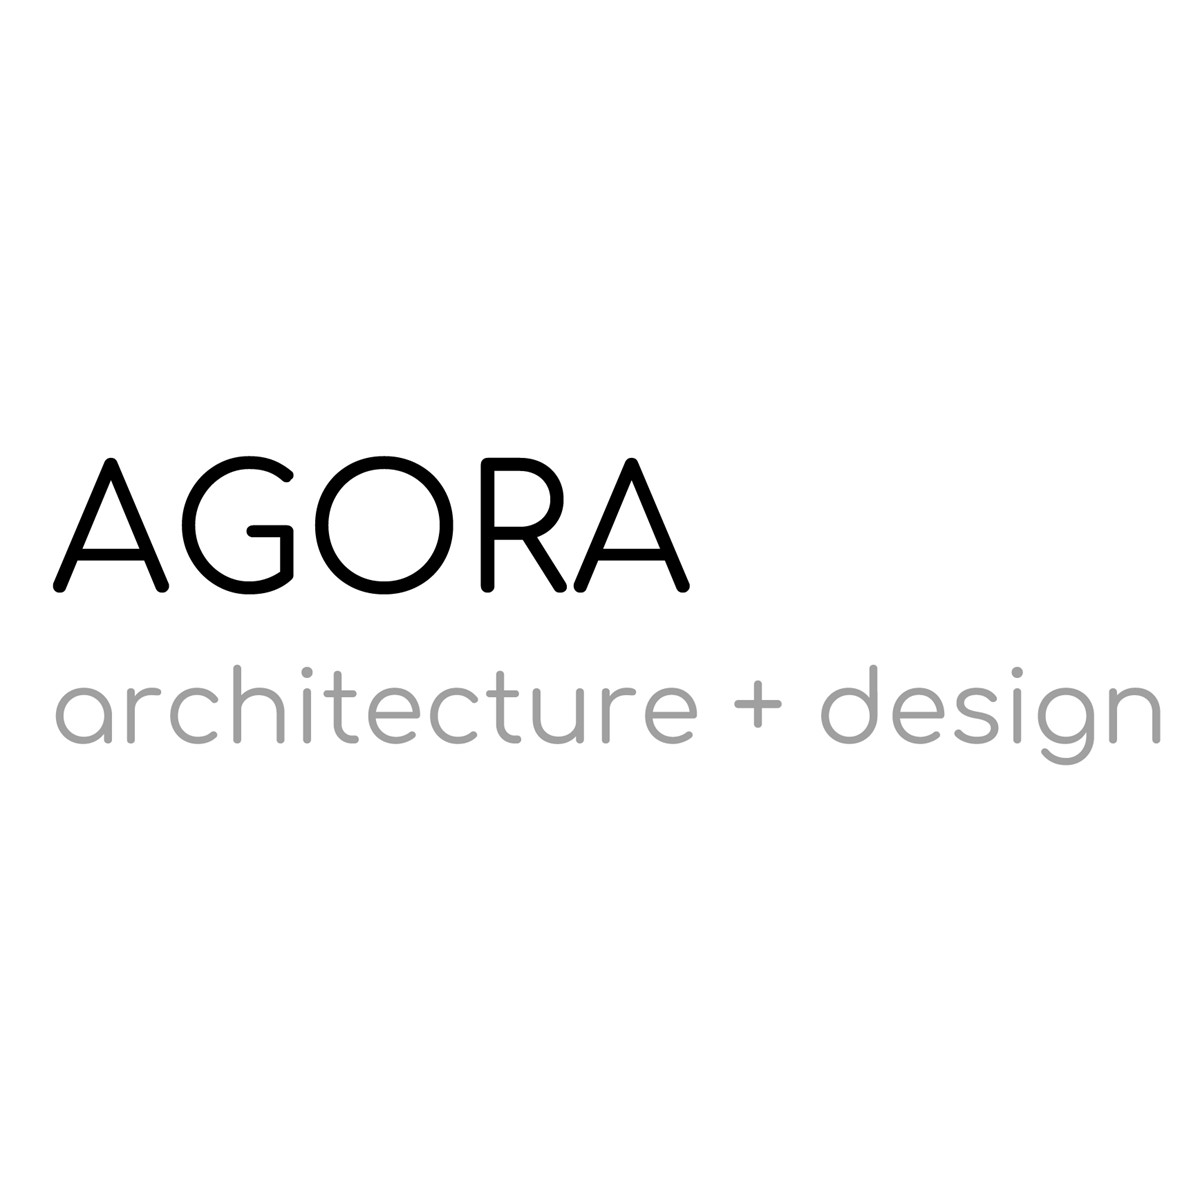 AGORA architecture + design Logo